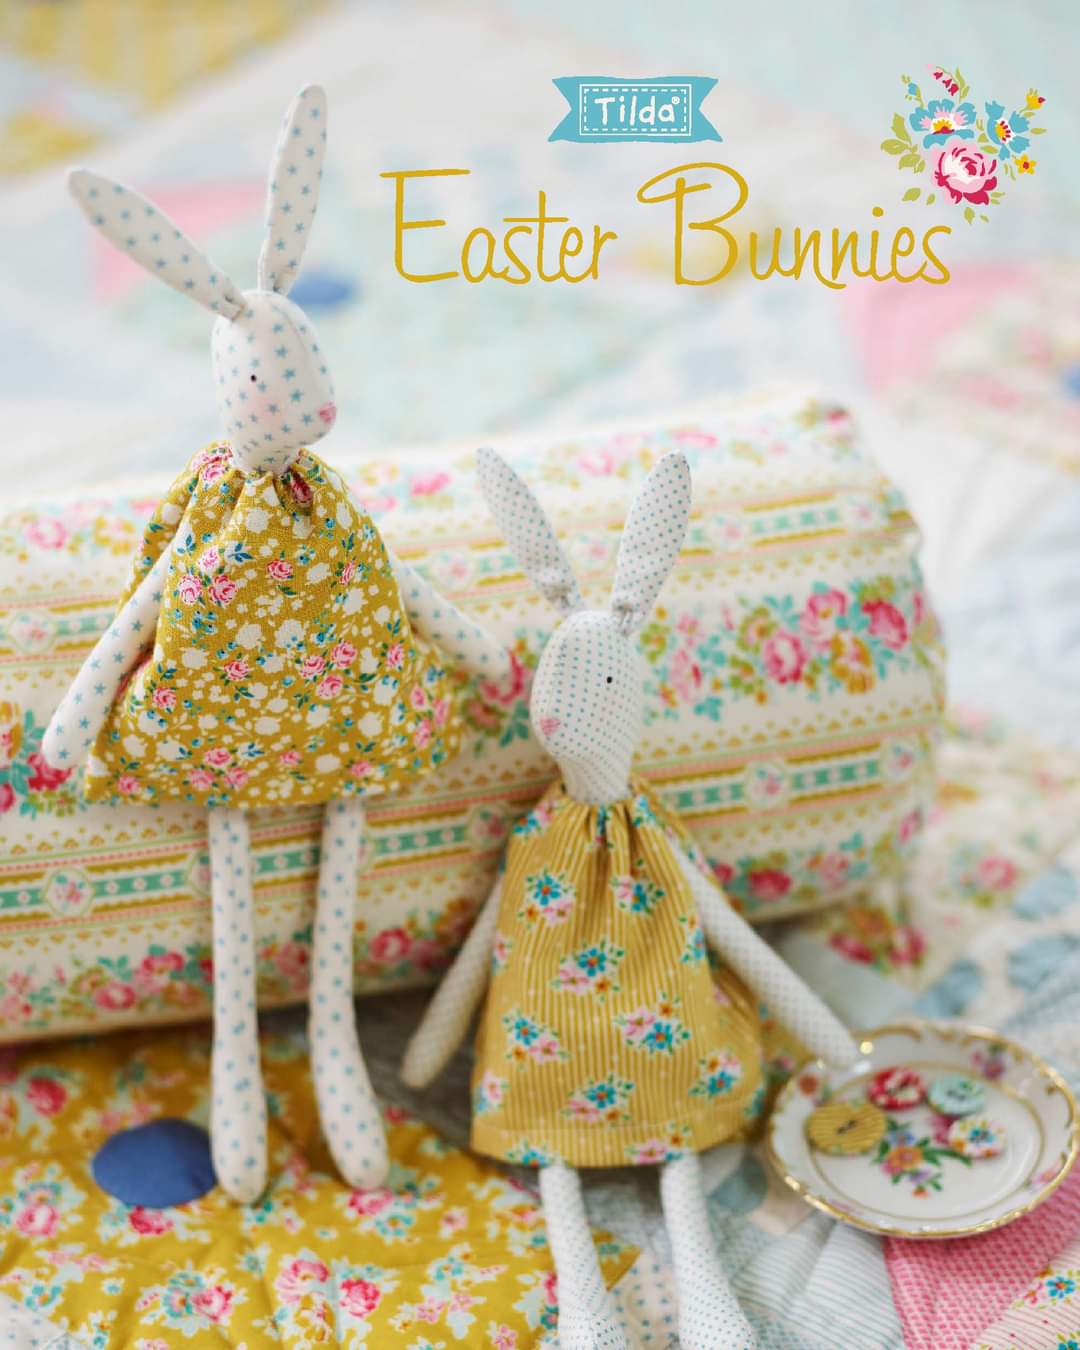 Tilda Easter bunny kit